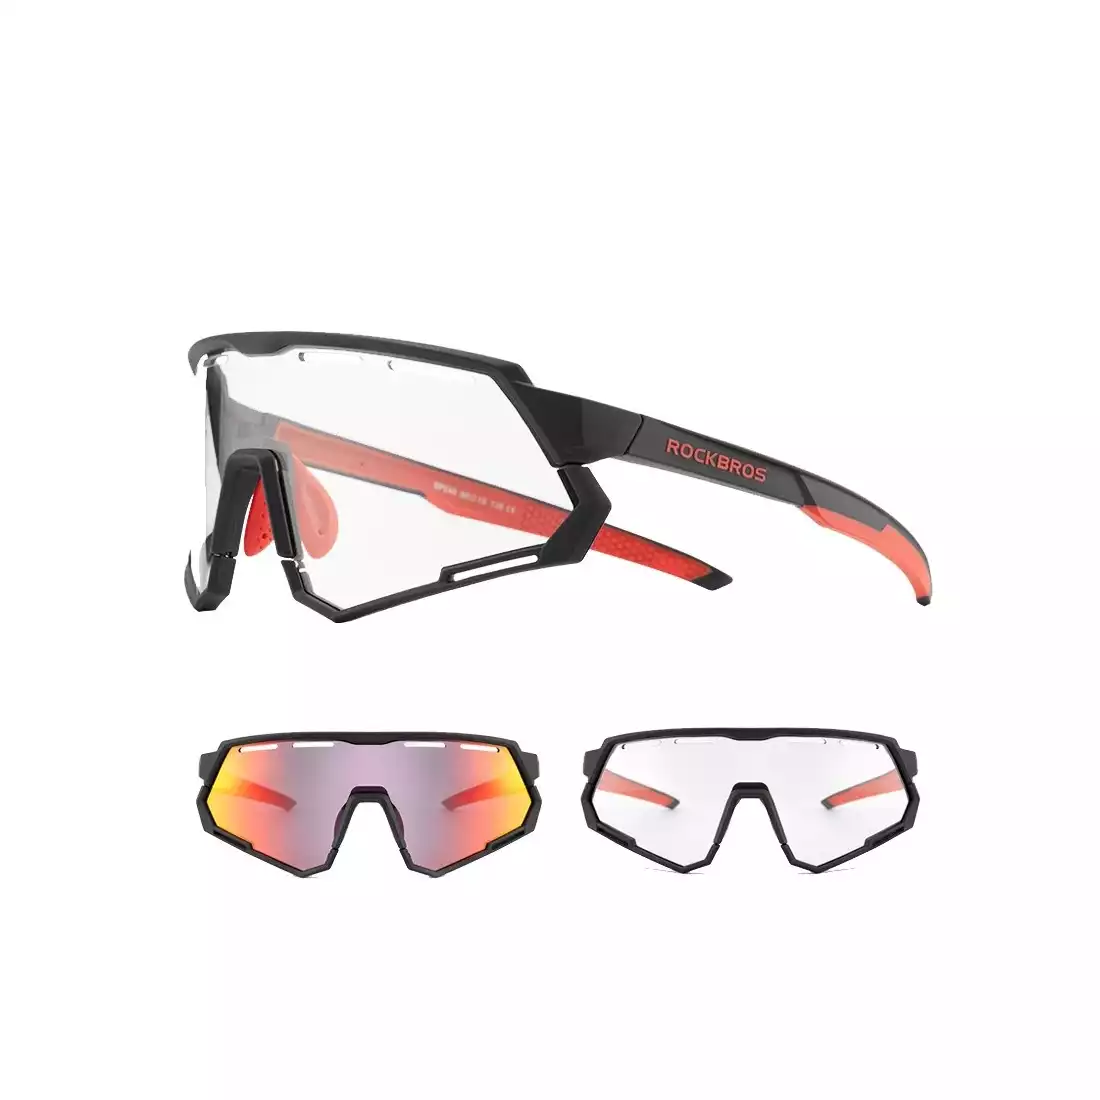 RockBros Sunglasses Double Lens Polarized Outdoor Sports Glasses Goggles 